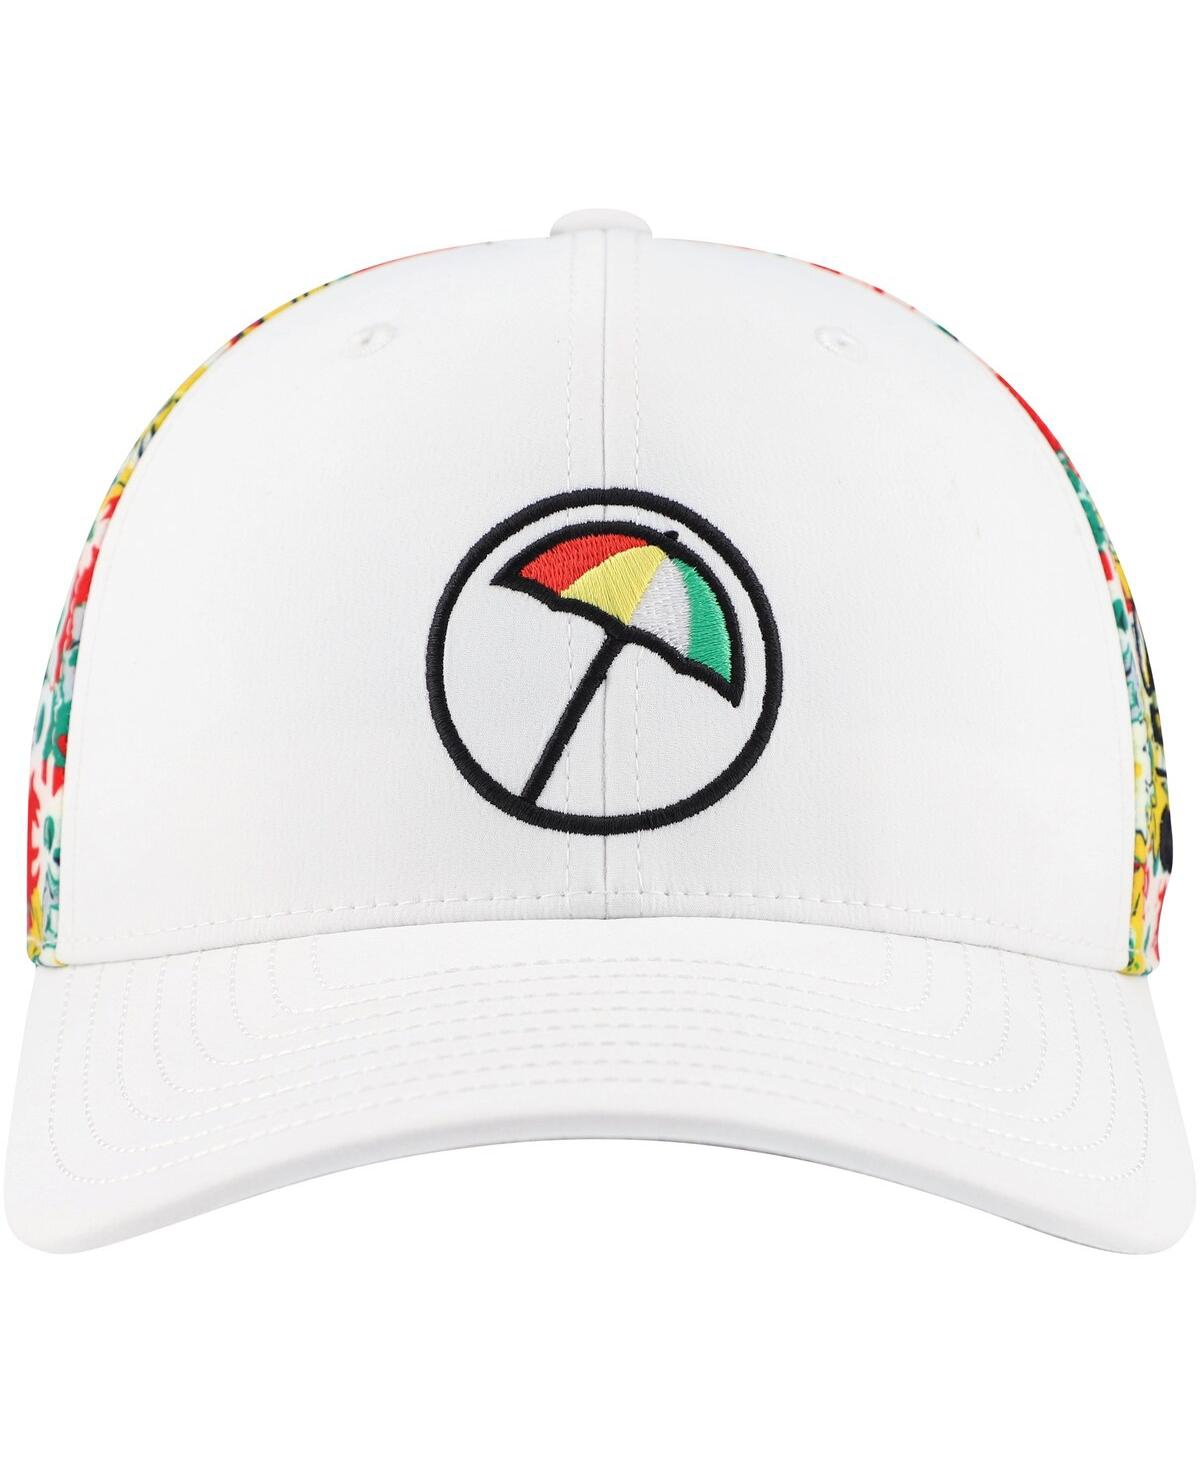 Shop Puma Men's White Arnold Palmer Invitational Floral Tech Flexfit Adjustable Hat